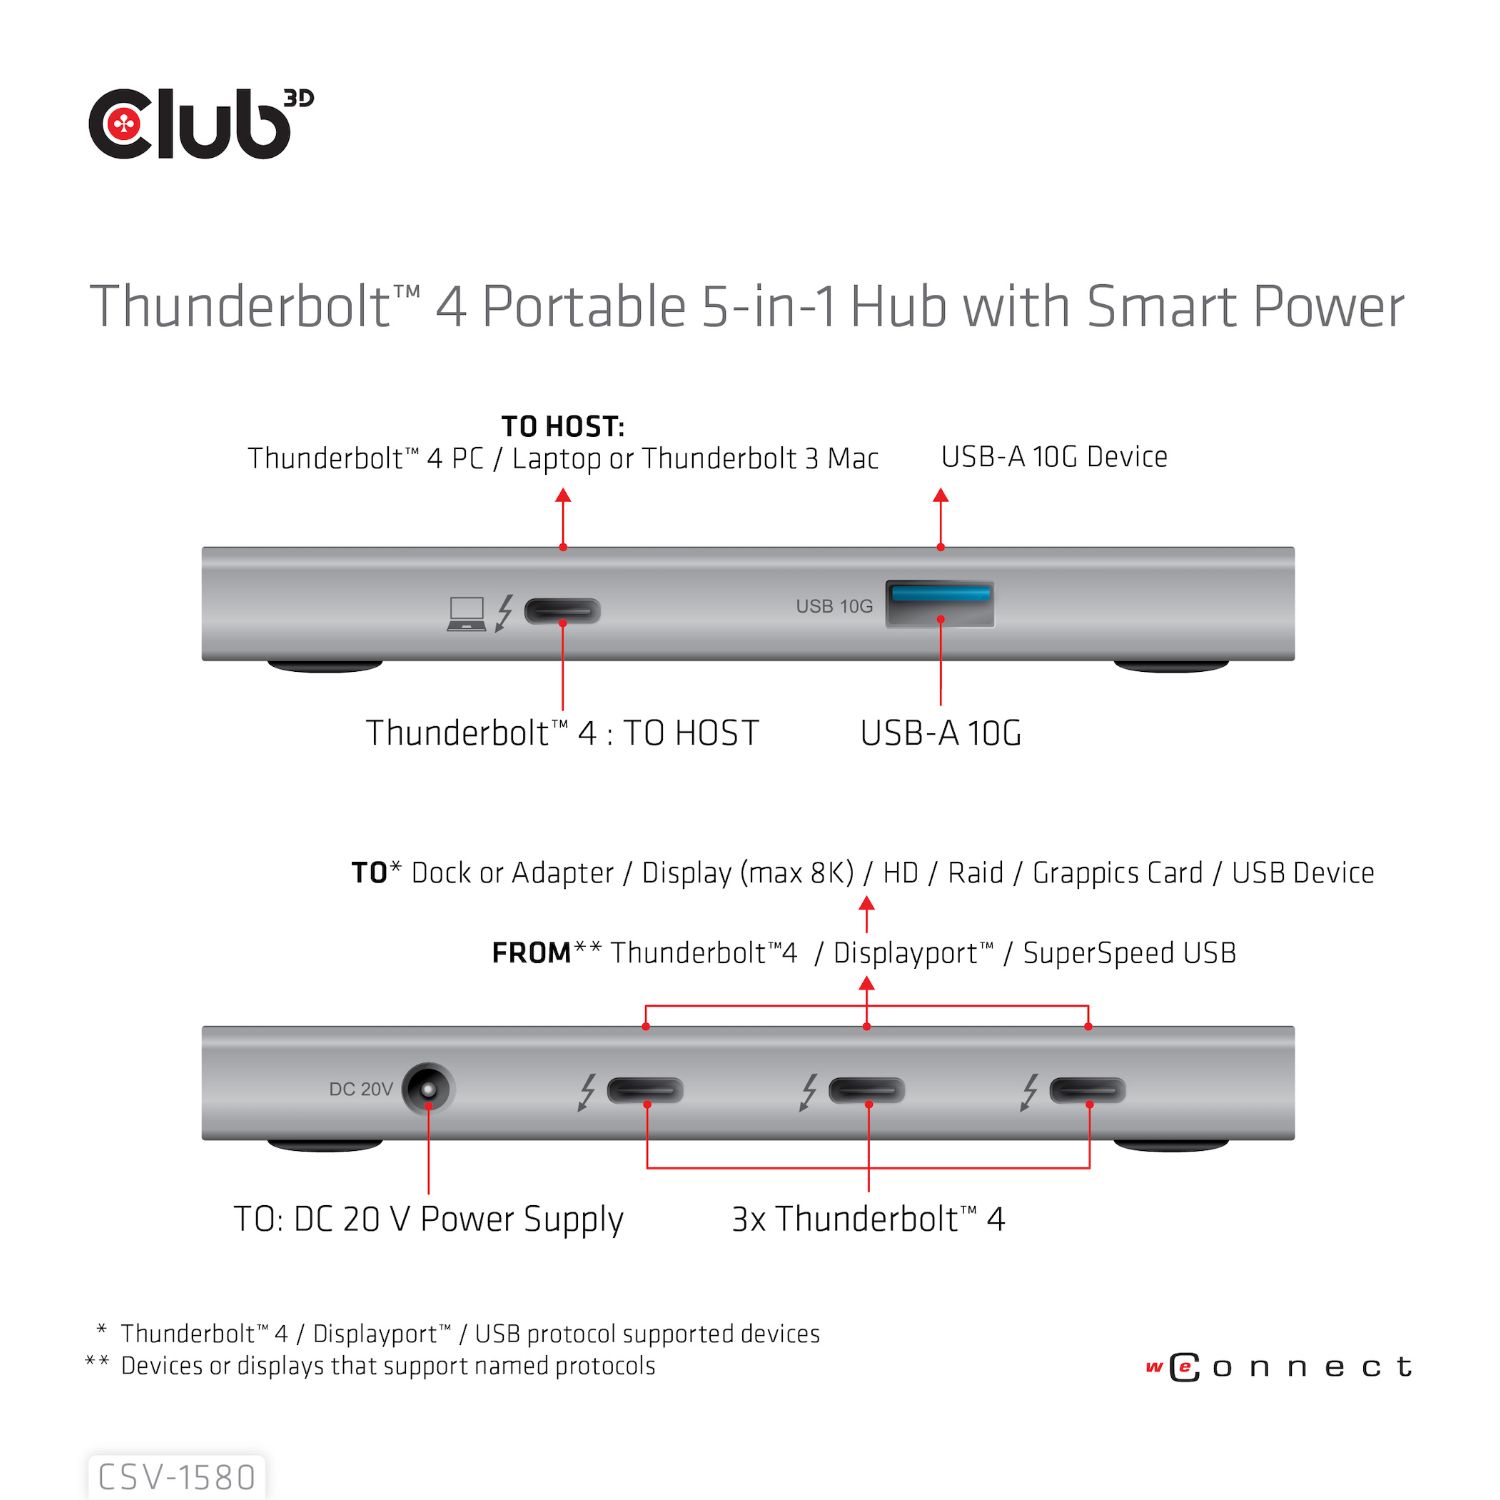 CSV-1580 - DockStation Club3D Thunderbolt 4 5 en 1 con Smart Power (CSV-1580)